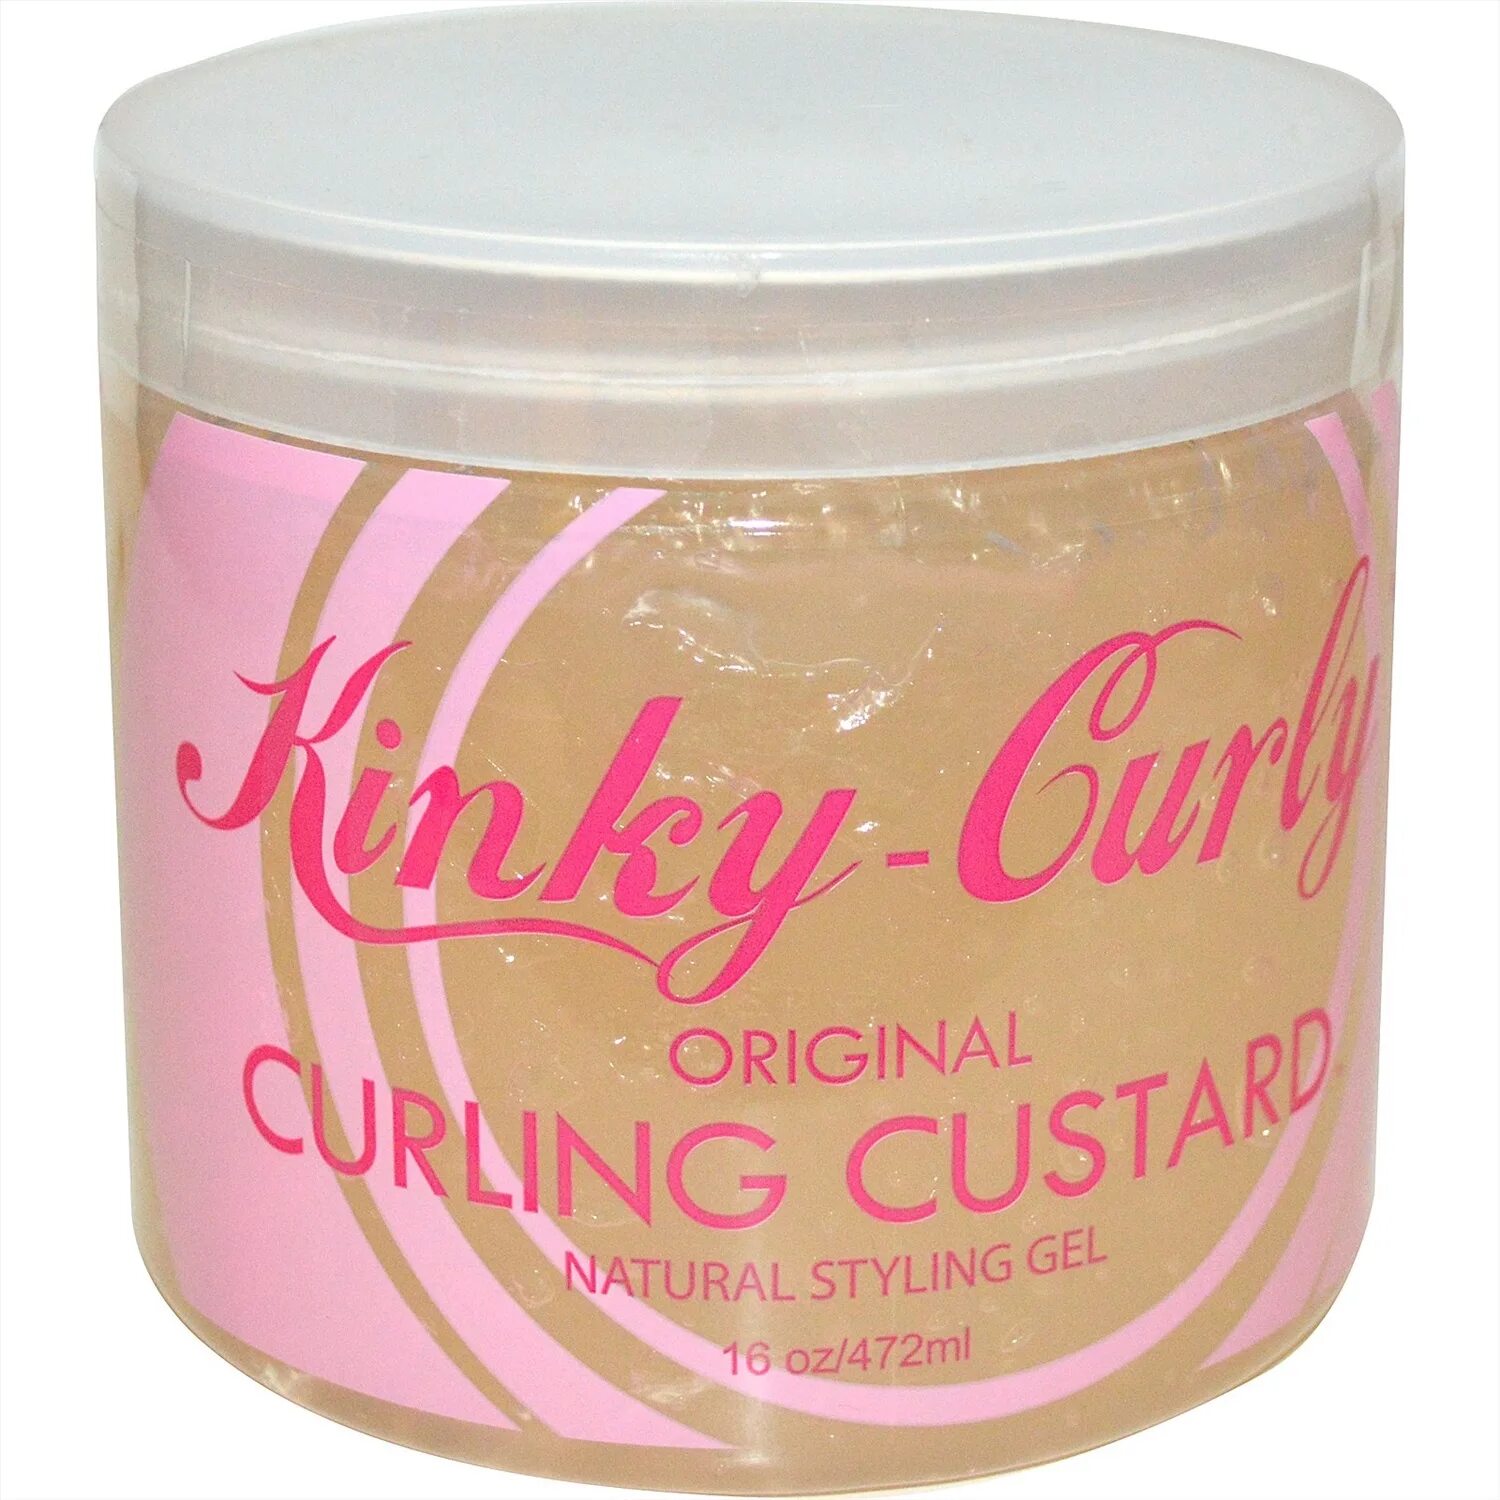 Kinky-curly Original Curling Custard natural styling Gel. Кастард kinky curly. Kinky curly гель. Гель для волос Кинки Керли.